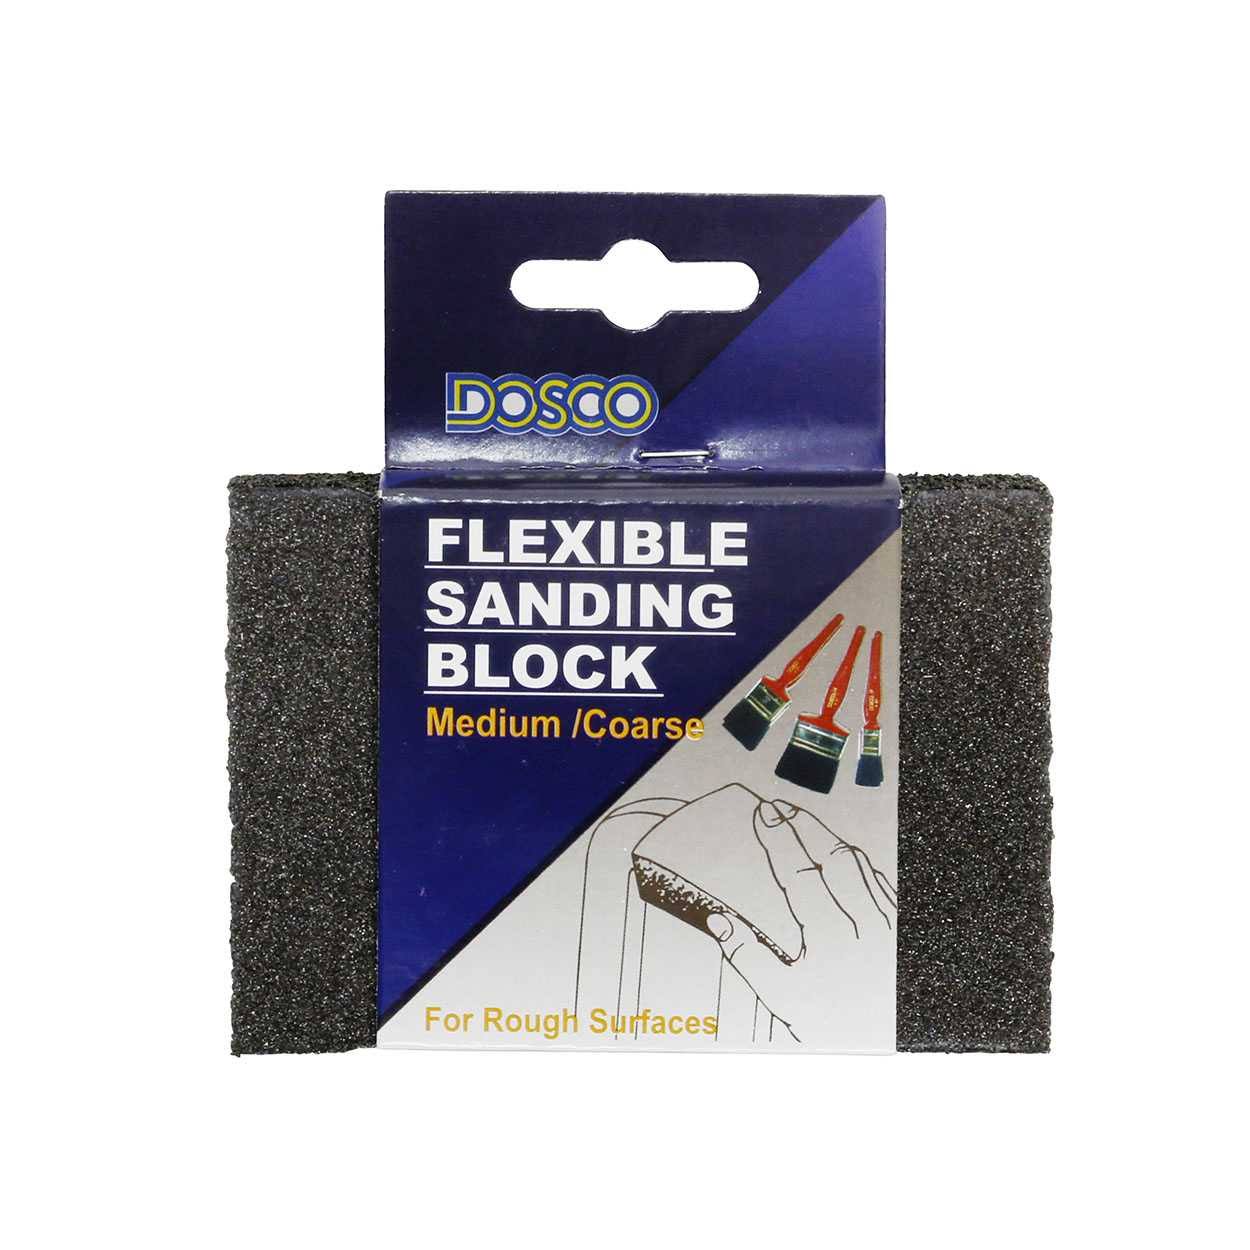 Dosco Flexible Sanding Blocks